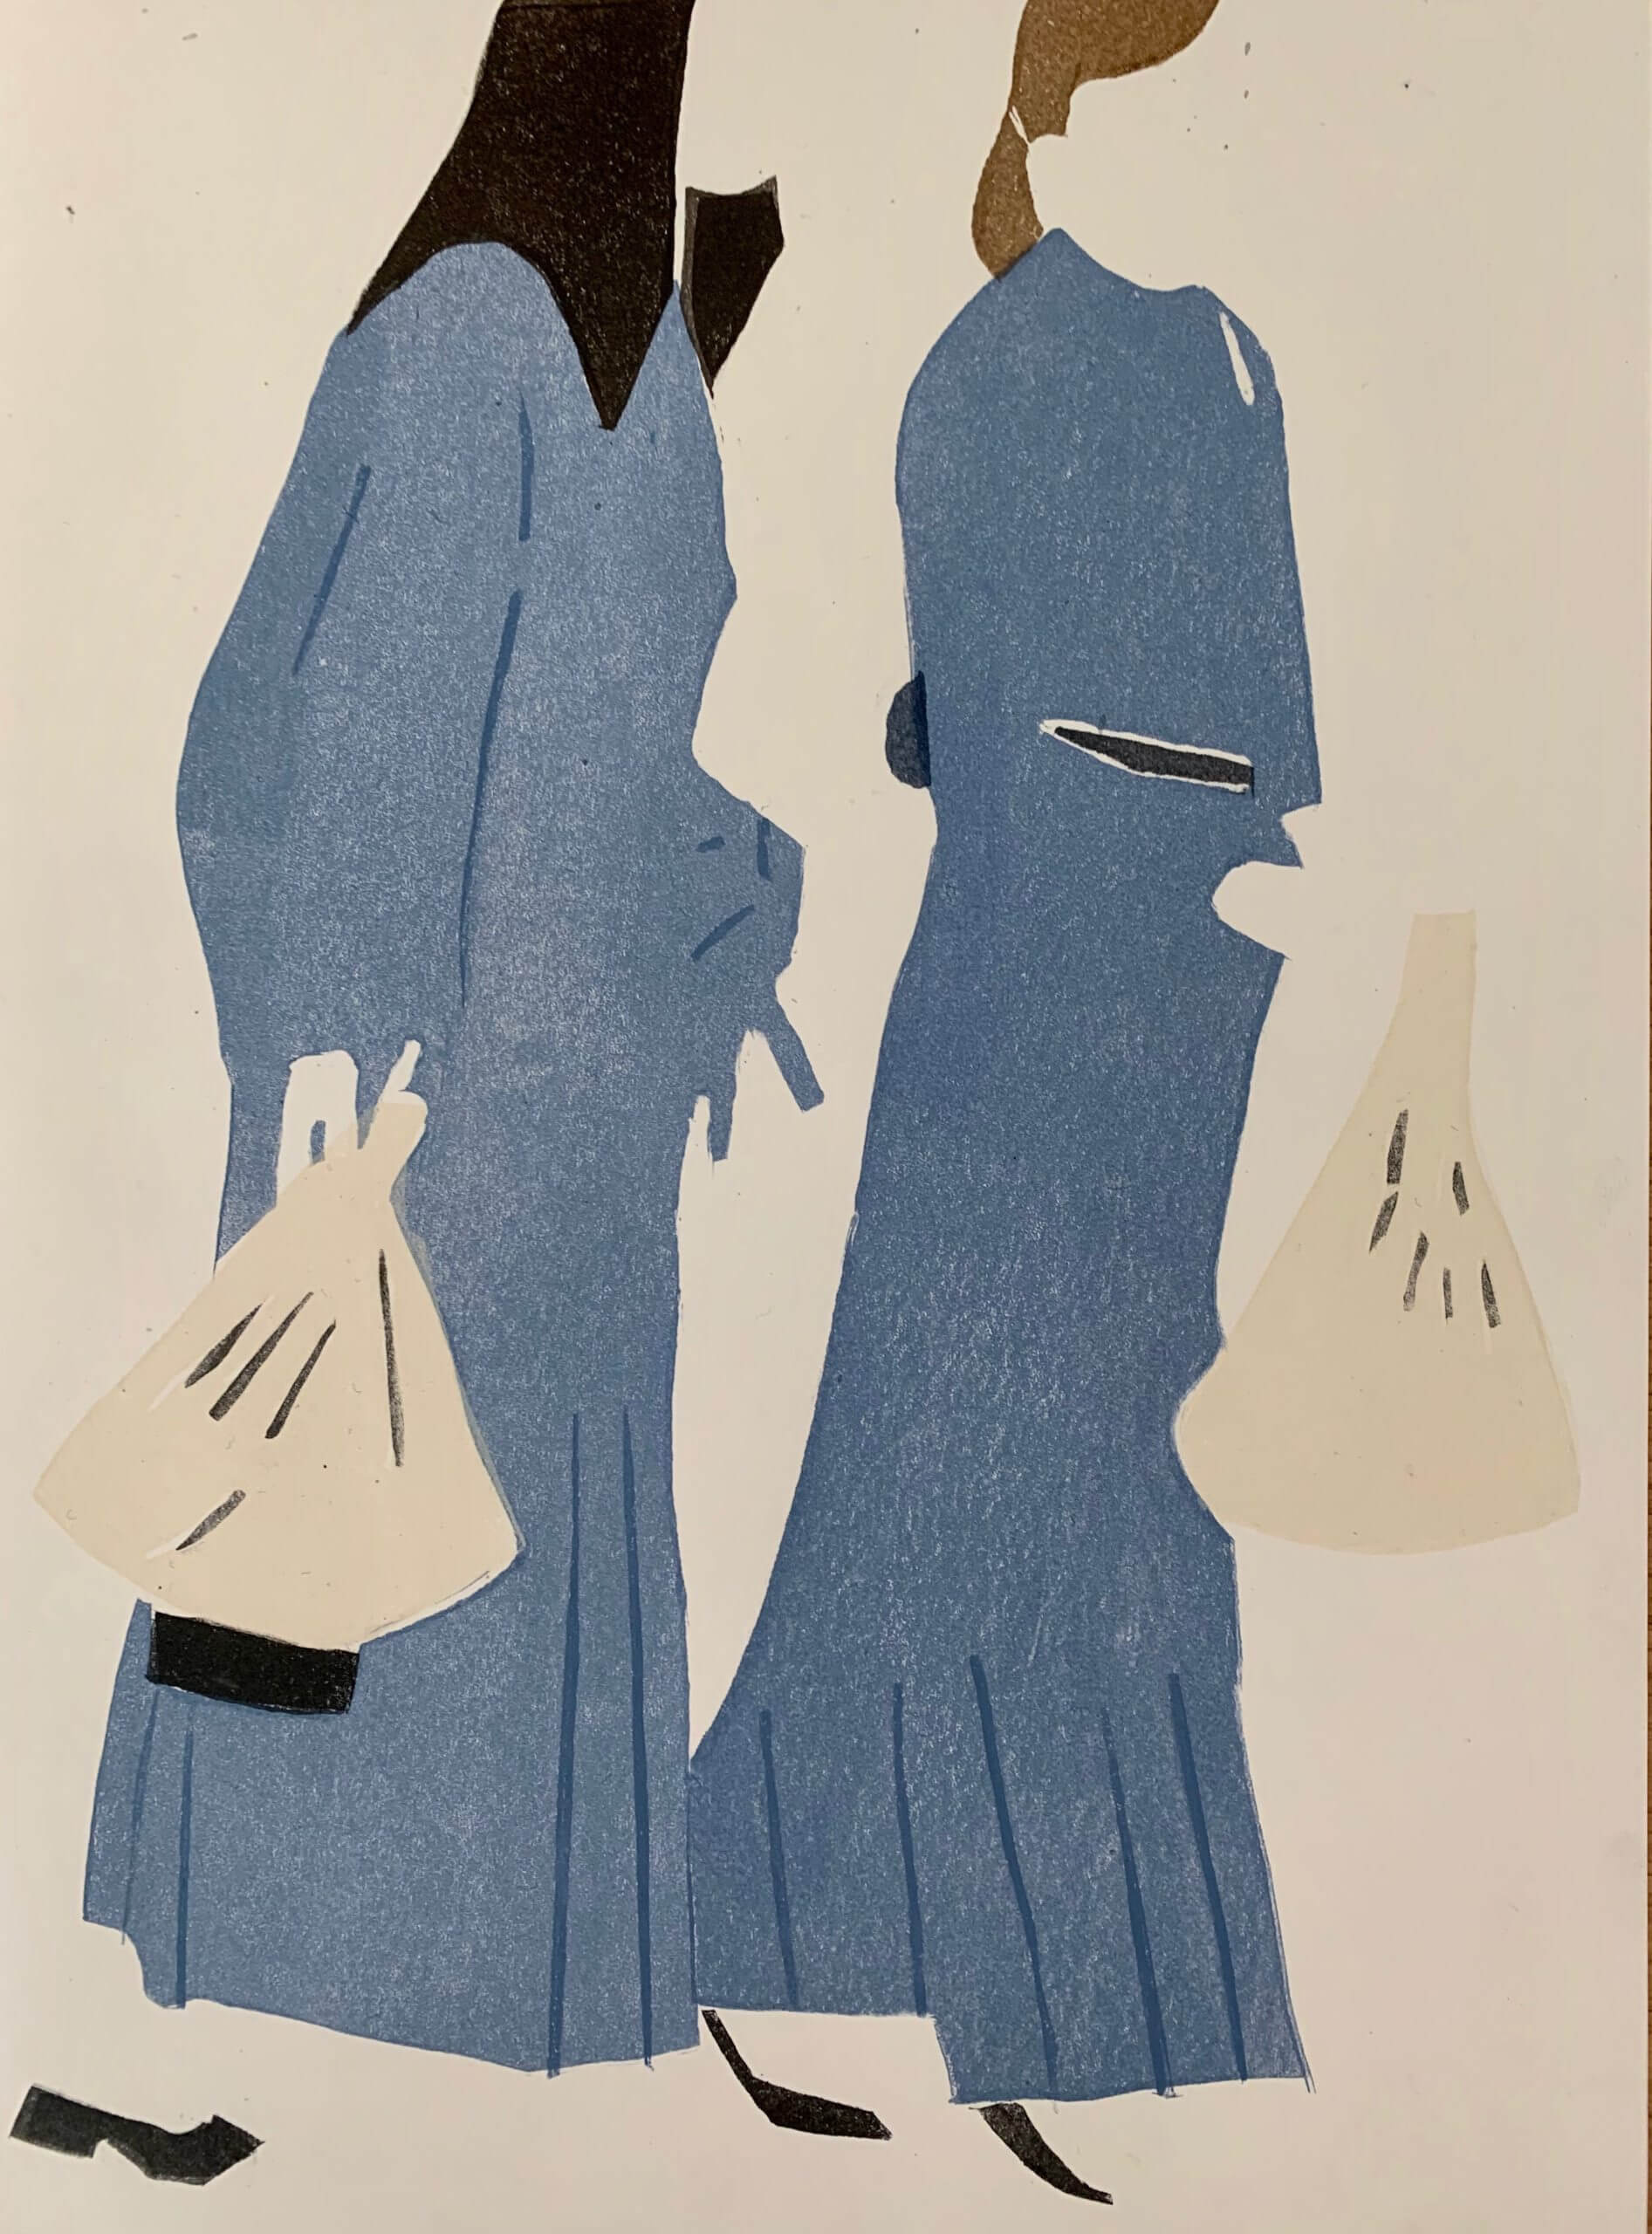 An artwork depicting women wearing blue apparel